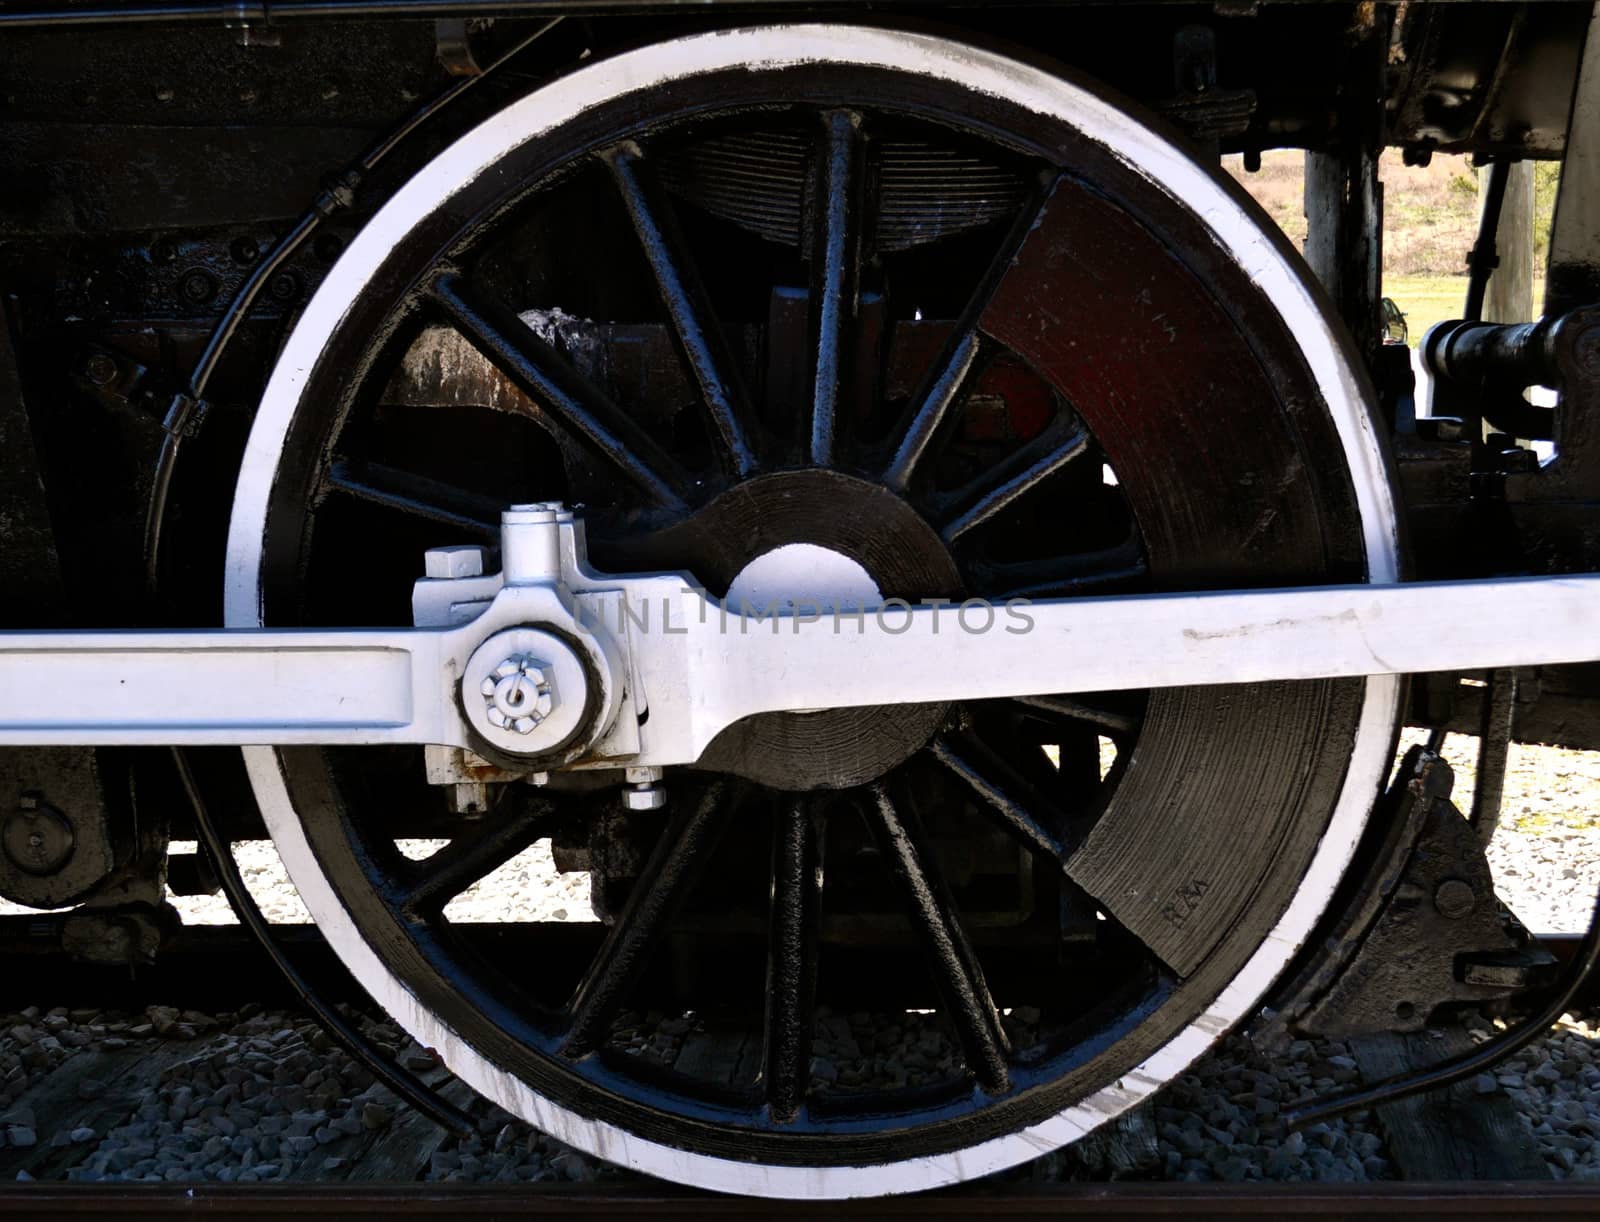 Locomotive Wheel by RefocusPhoto